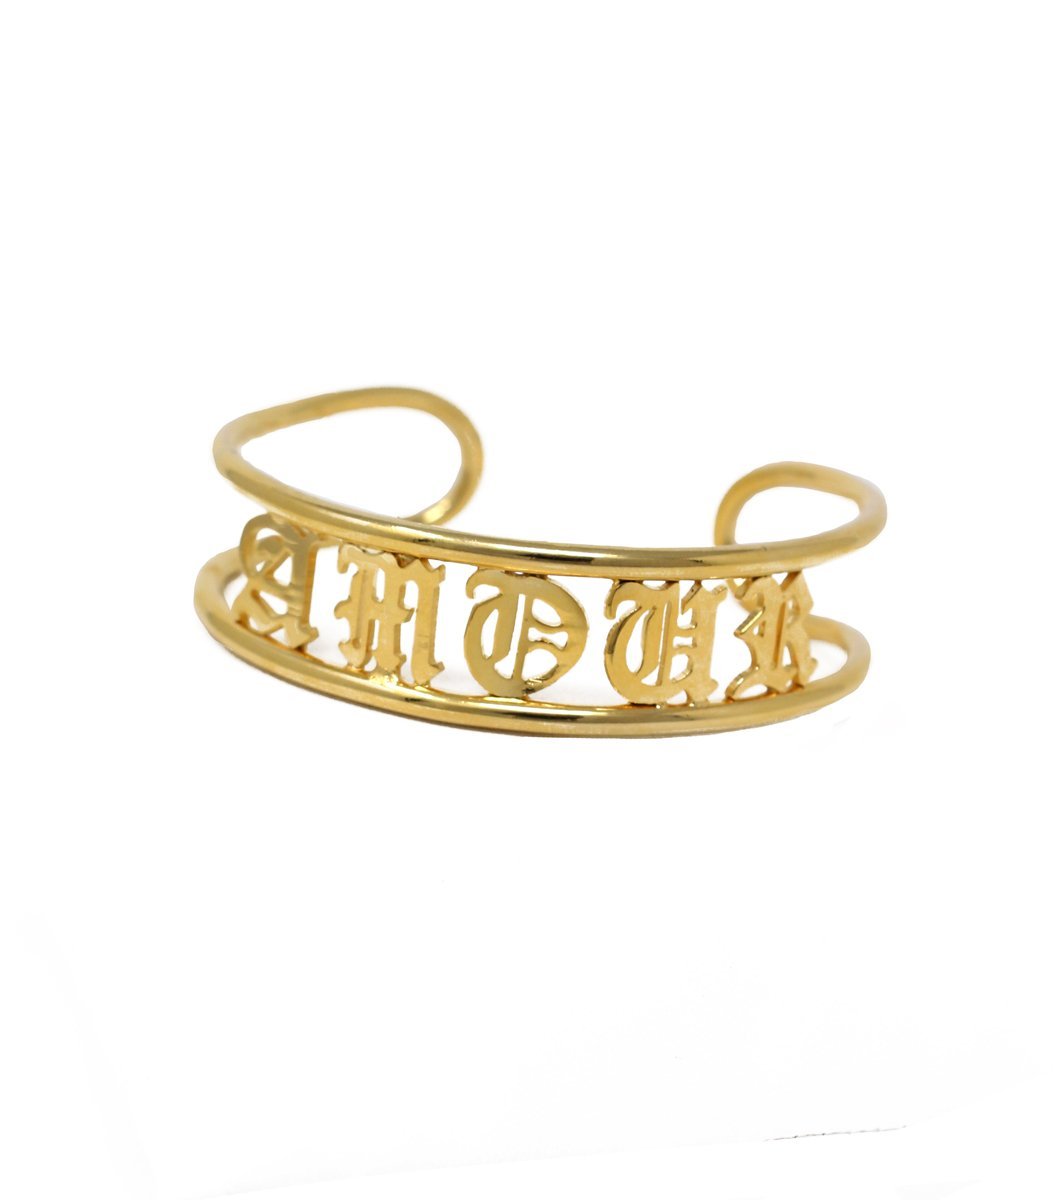 Gothic letters bracelet - Laura Cantu Jewelry - Mx